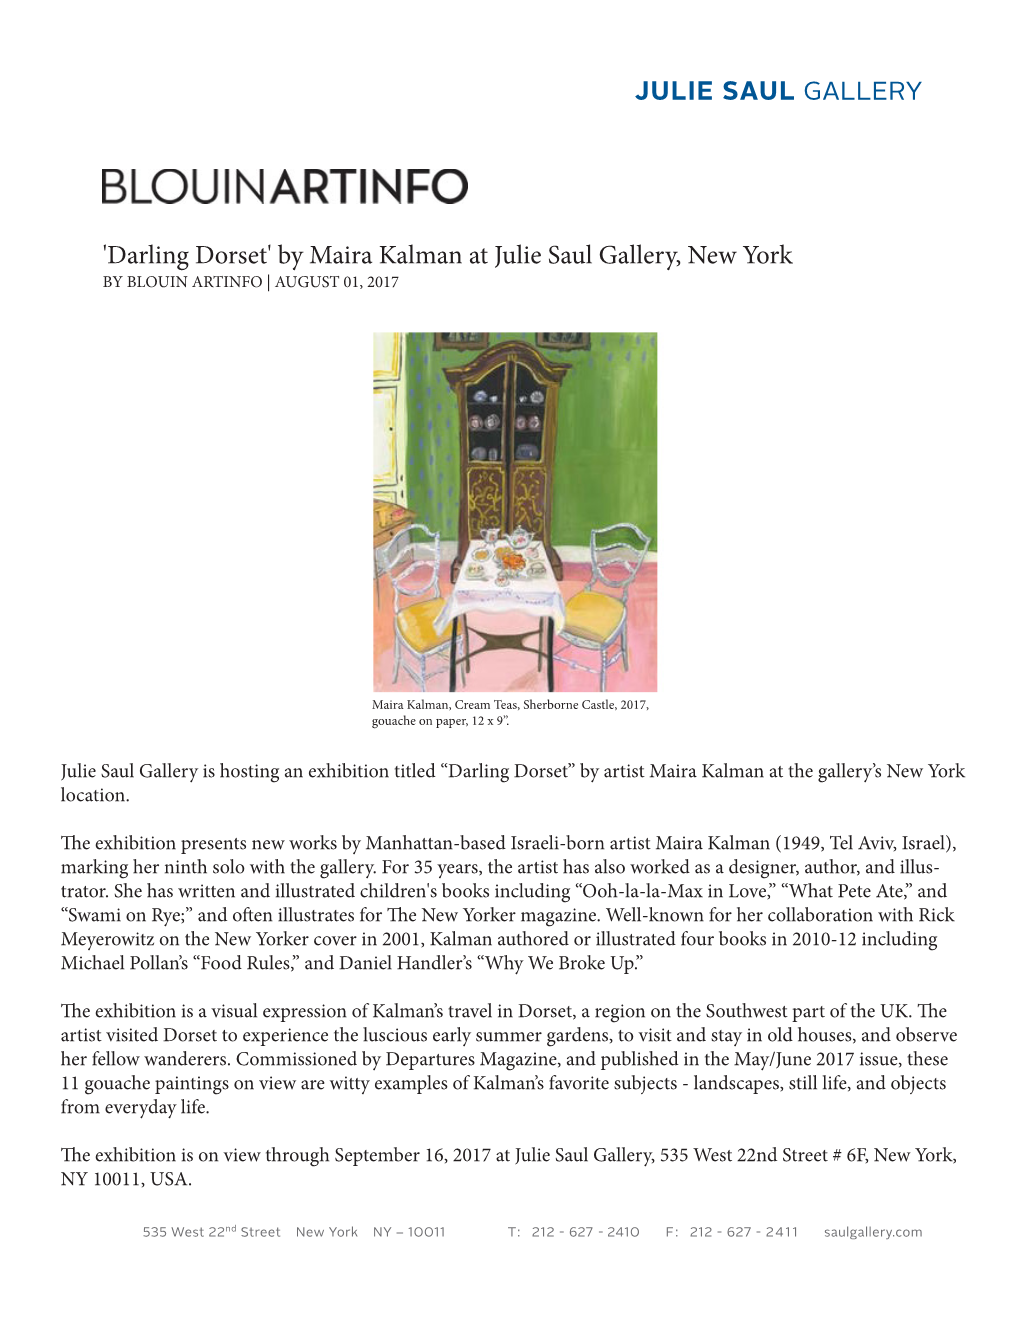 'Darling Dorset' by Maira Kalman at Julie Saul Gallery, New York by BLOUIN ARTINFO | AUGUST 01, 2017